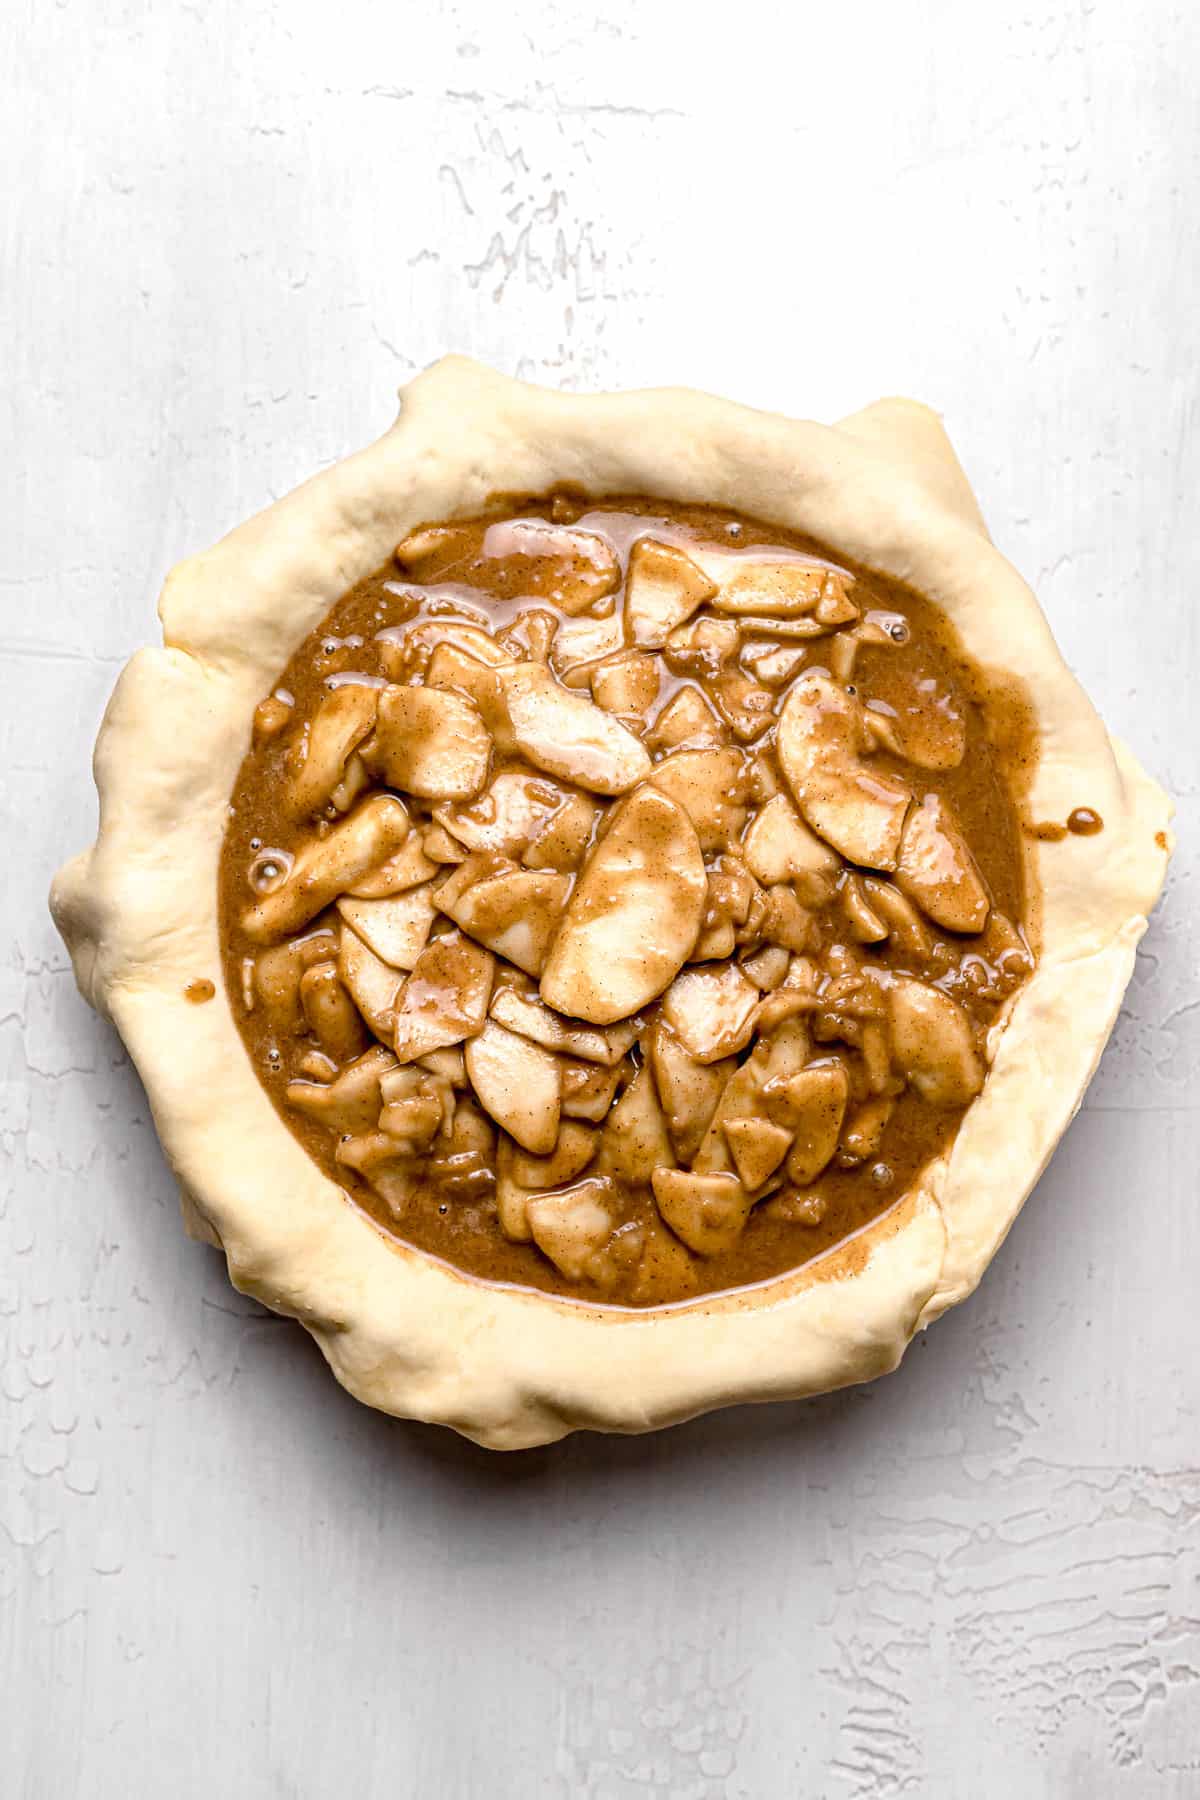 apple pie filling poured in bottom pie crust.